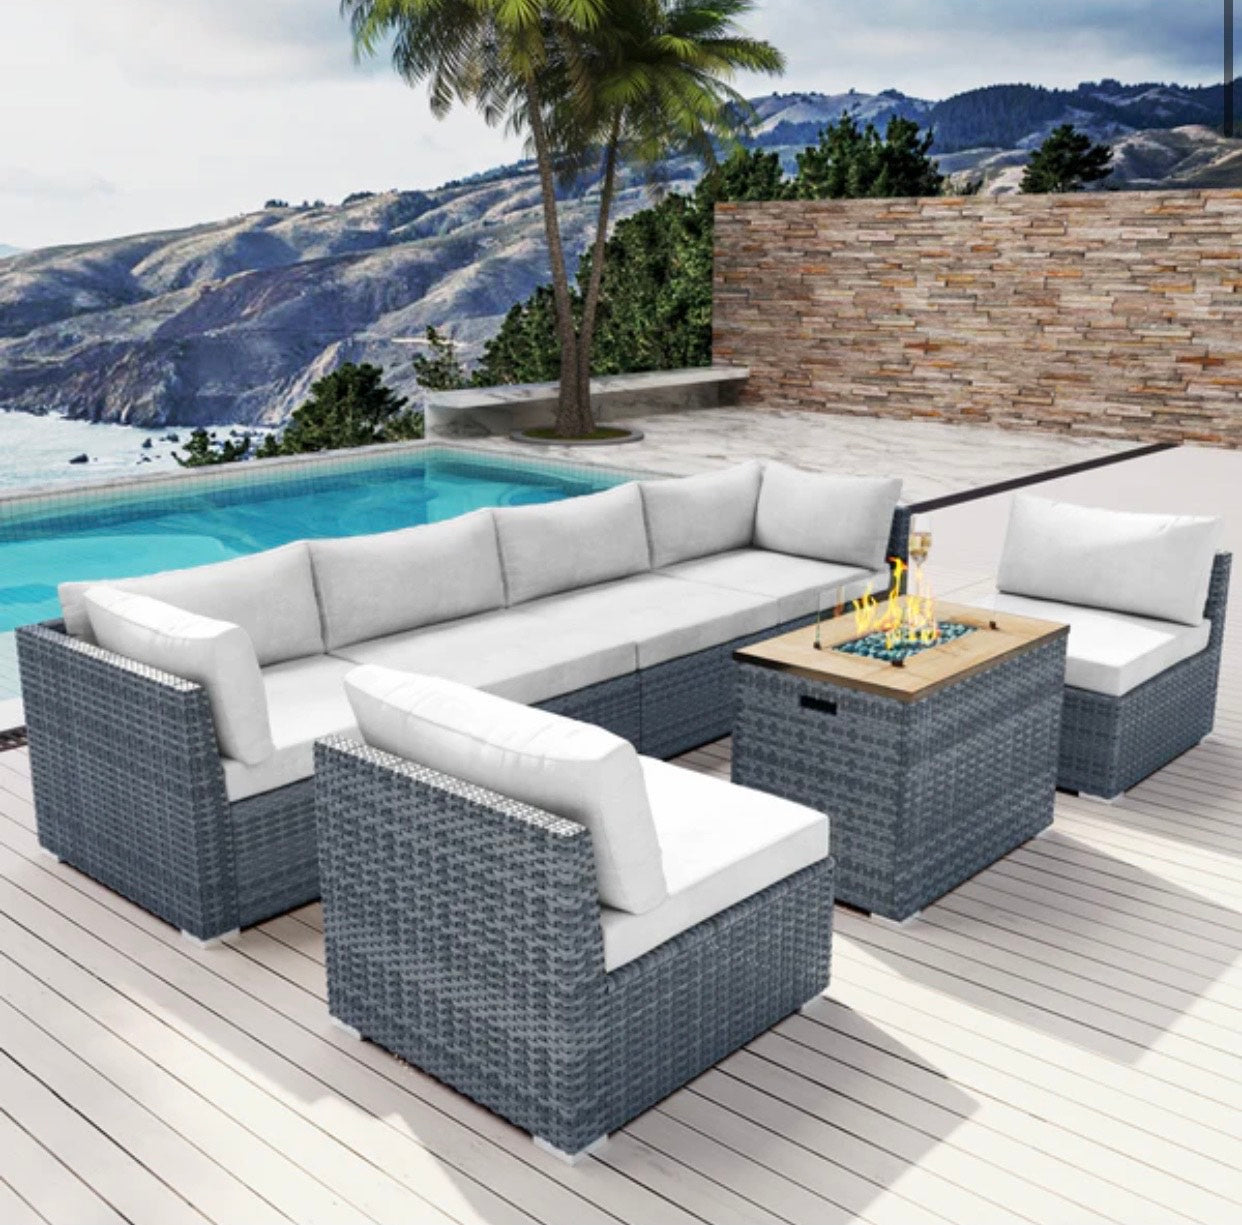 White 7 Seven piece Outdoor Patio Furniture with Propane Fire Pit Gray Wicker Santa Monica Beach